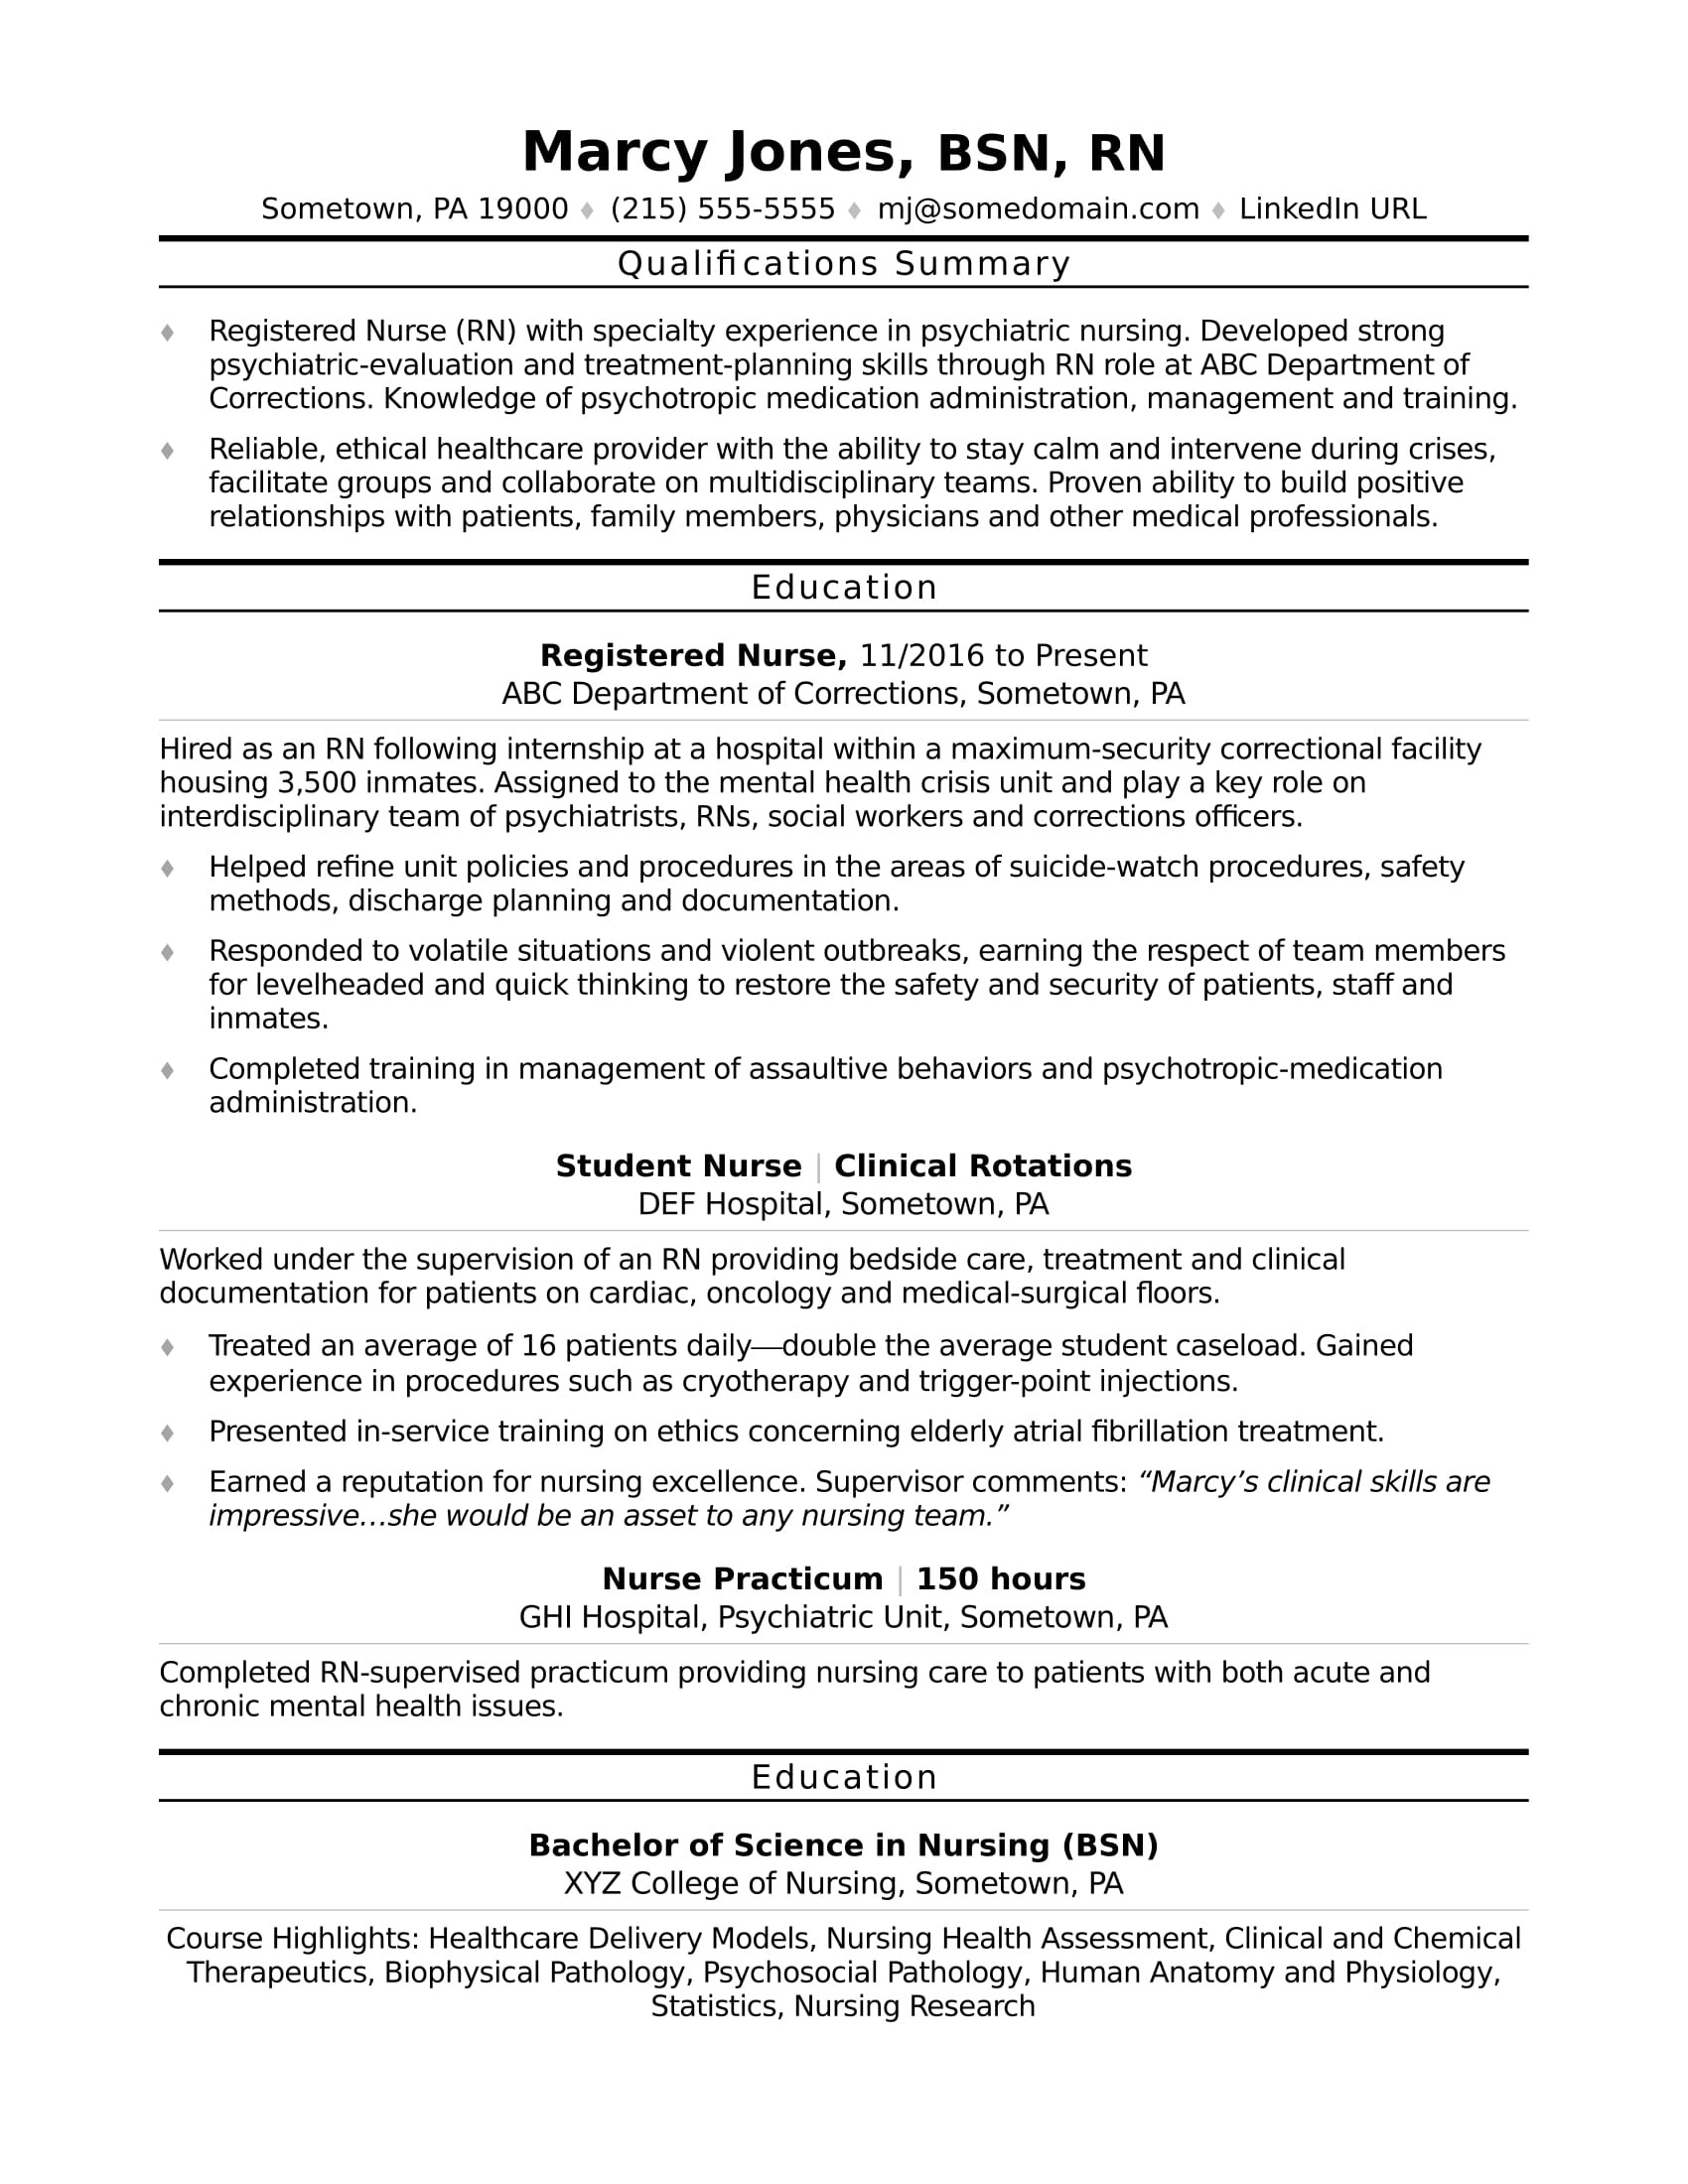 Sample Resume Of Entry Level Nurse Entry-level Nurse Resume Monster.com